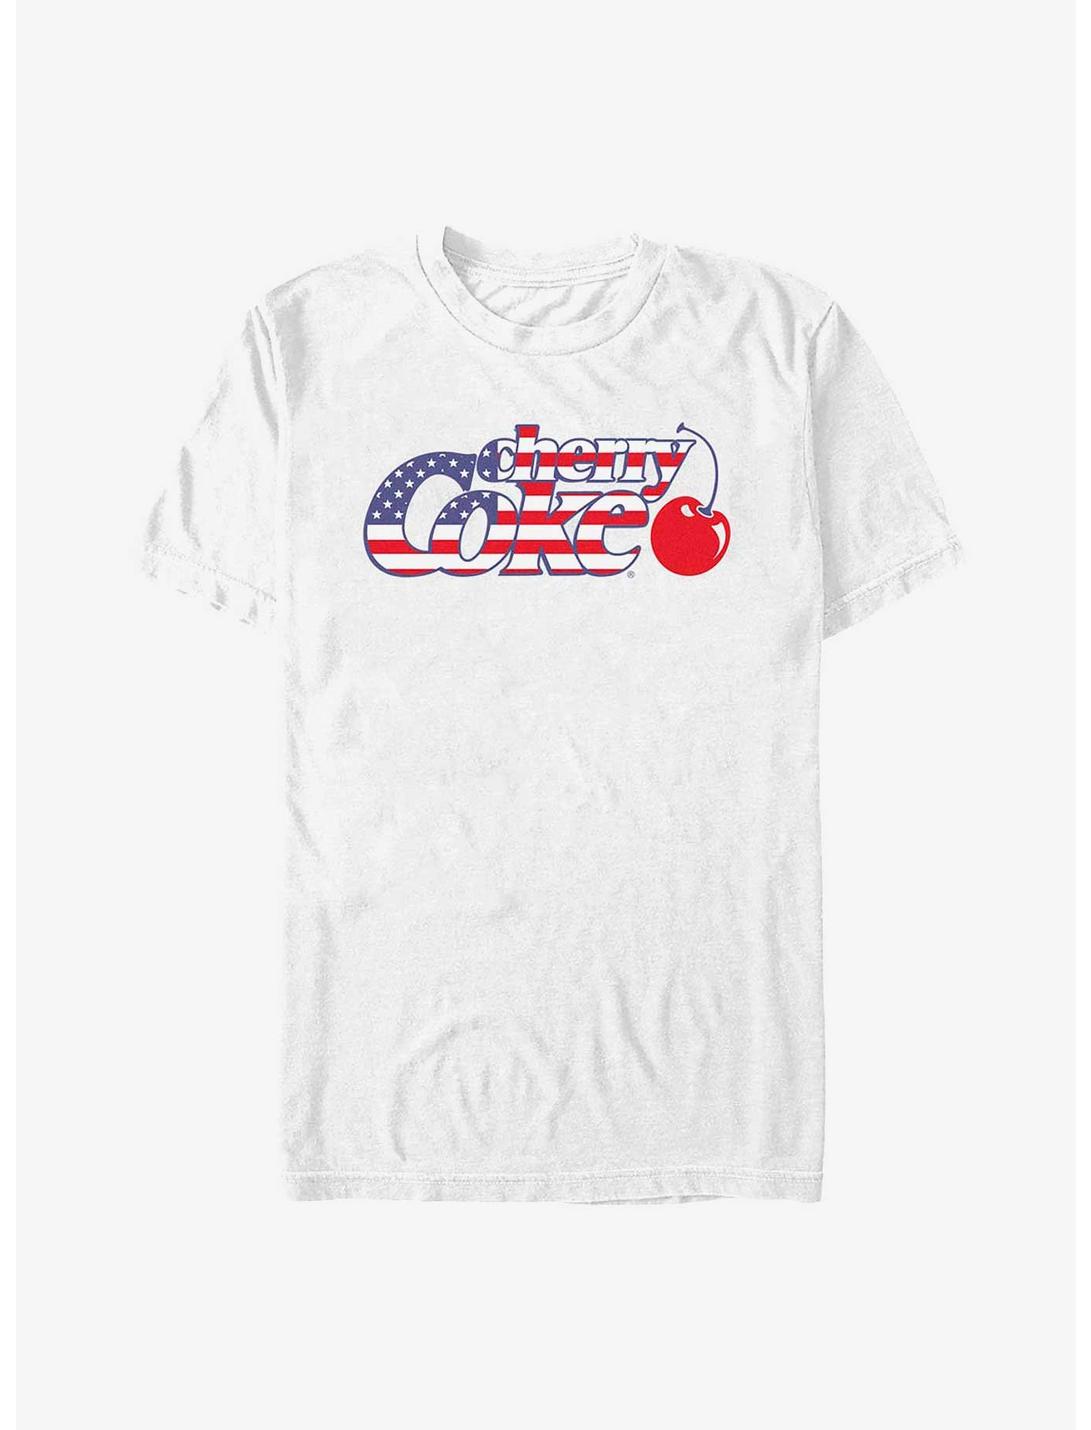 Coca-Cola Cherry Coke Americana T-Shirt, WHITE, hi-res